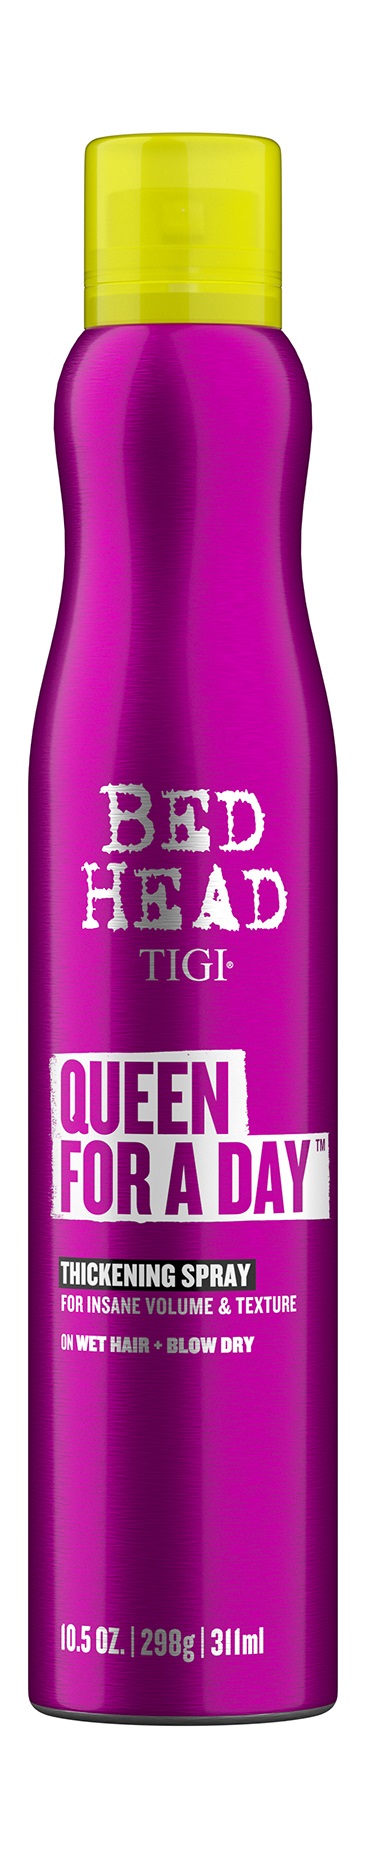 Tigi bed head queen for a day спрей лак для придания объема волосам 311мл